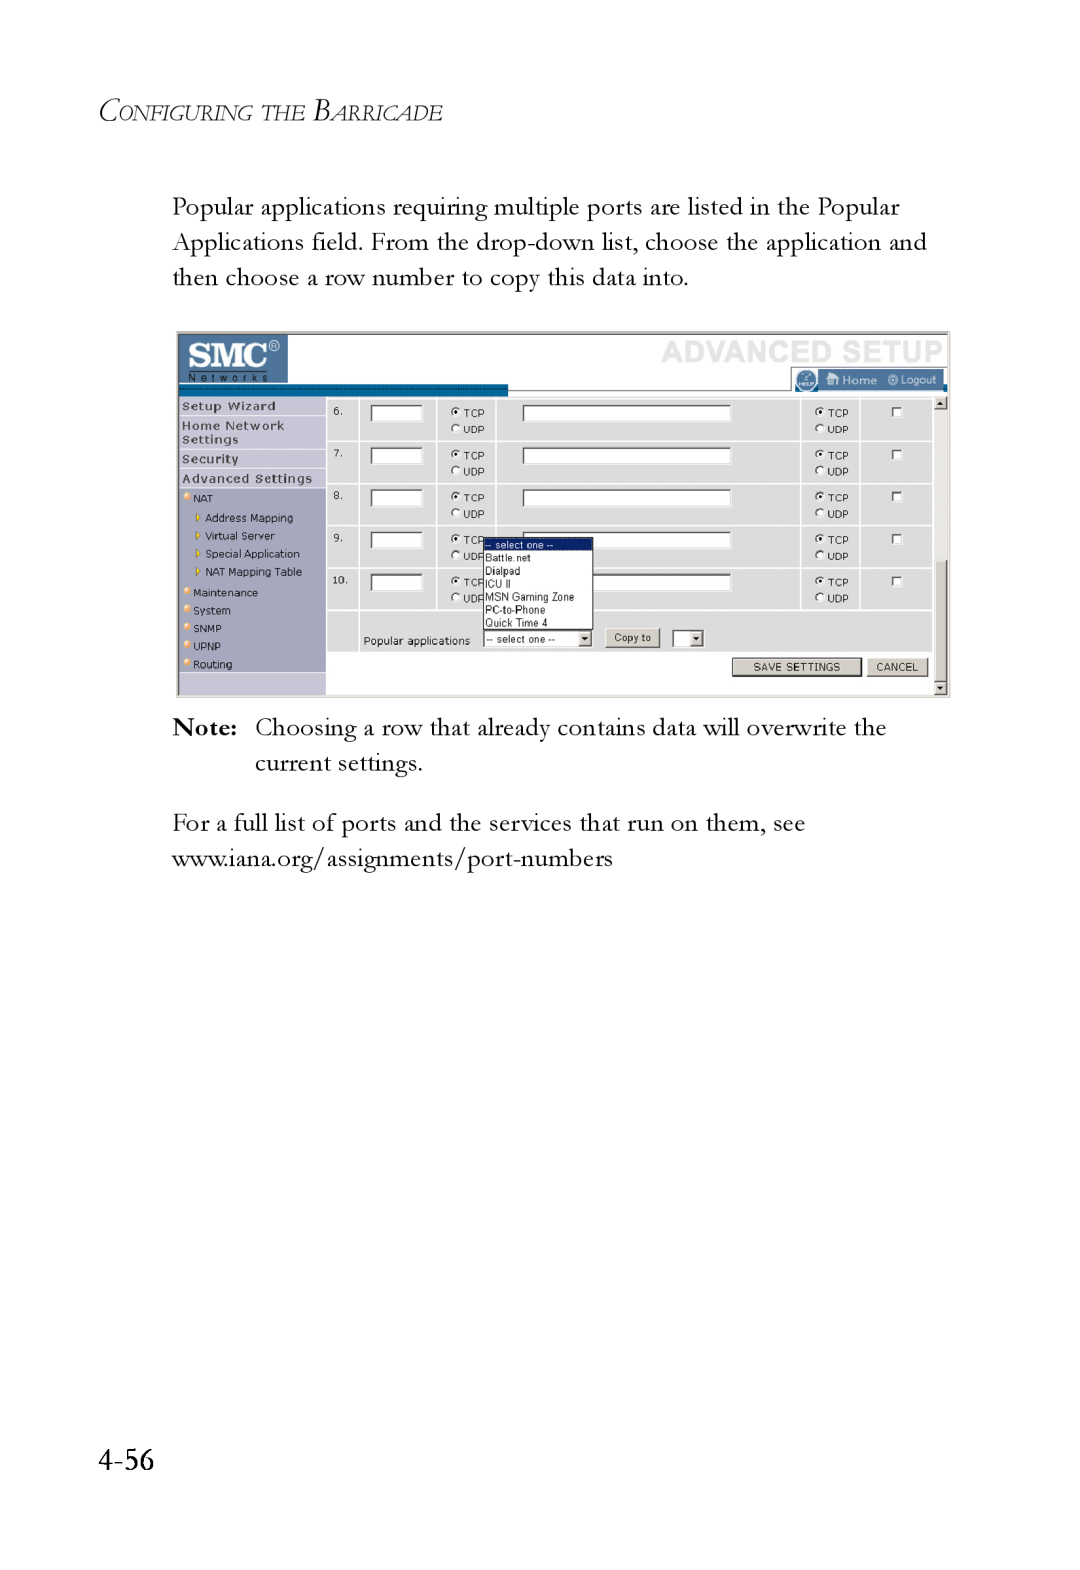 SMC Networks SMCWBR14T-G manual 4-56 